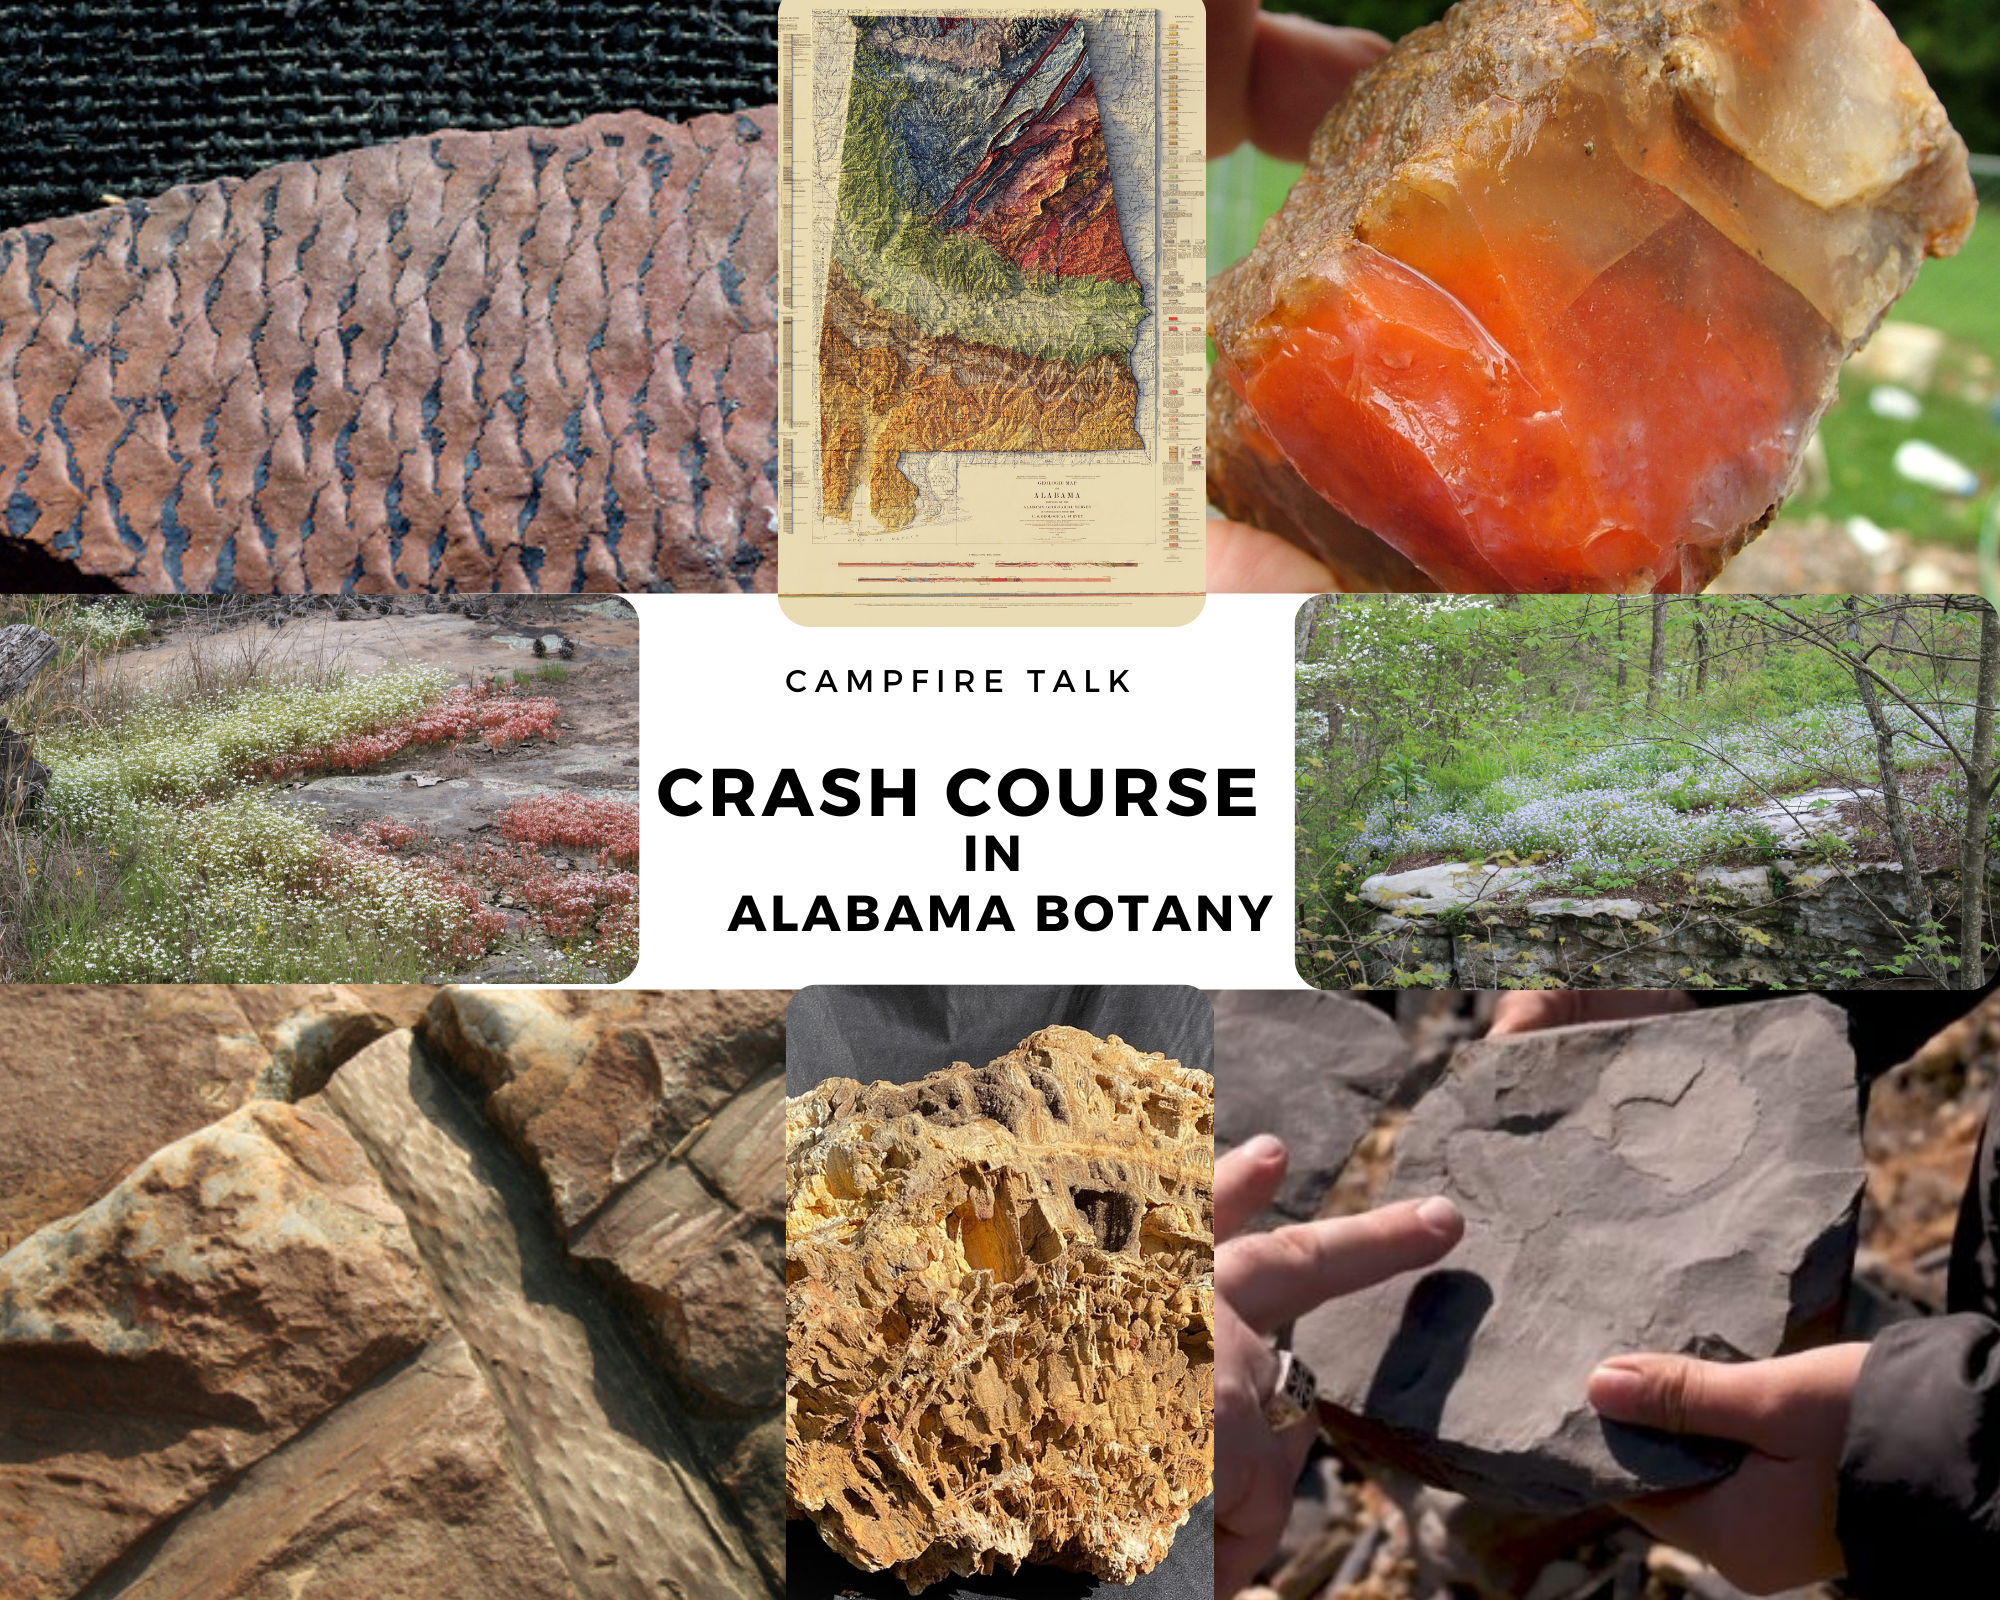 DSP Campfire Talk: Crash Course in Alabama Botany for Rock Hounds